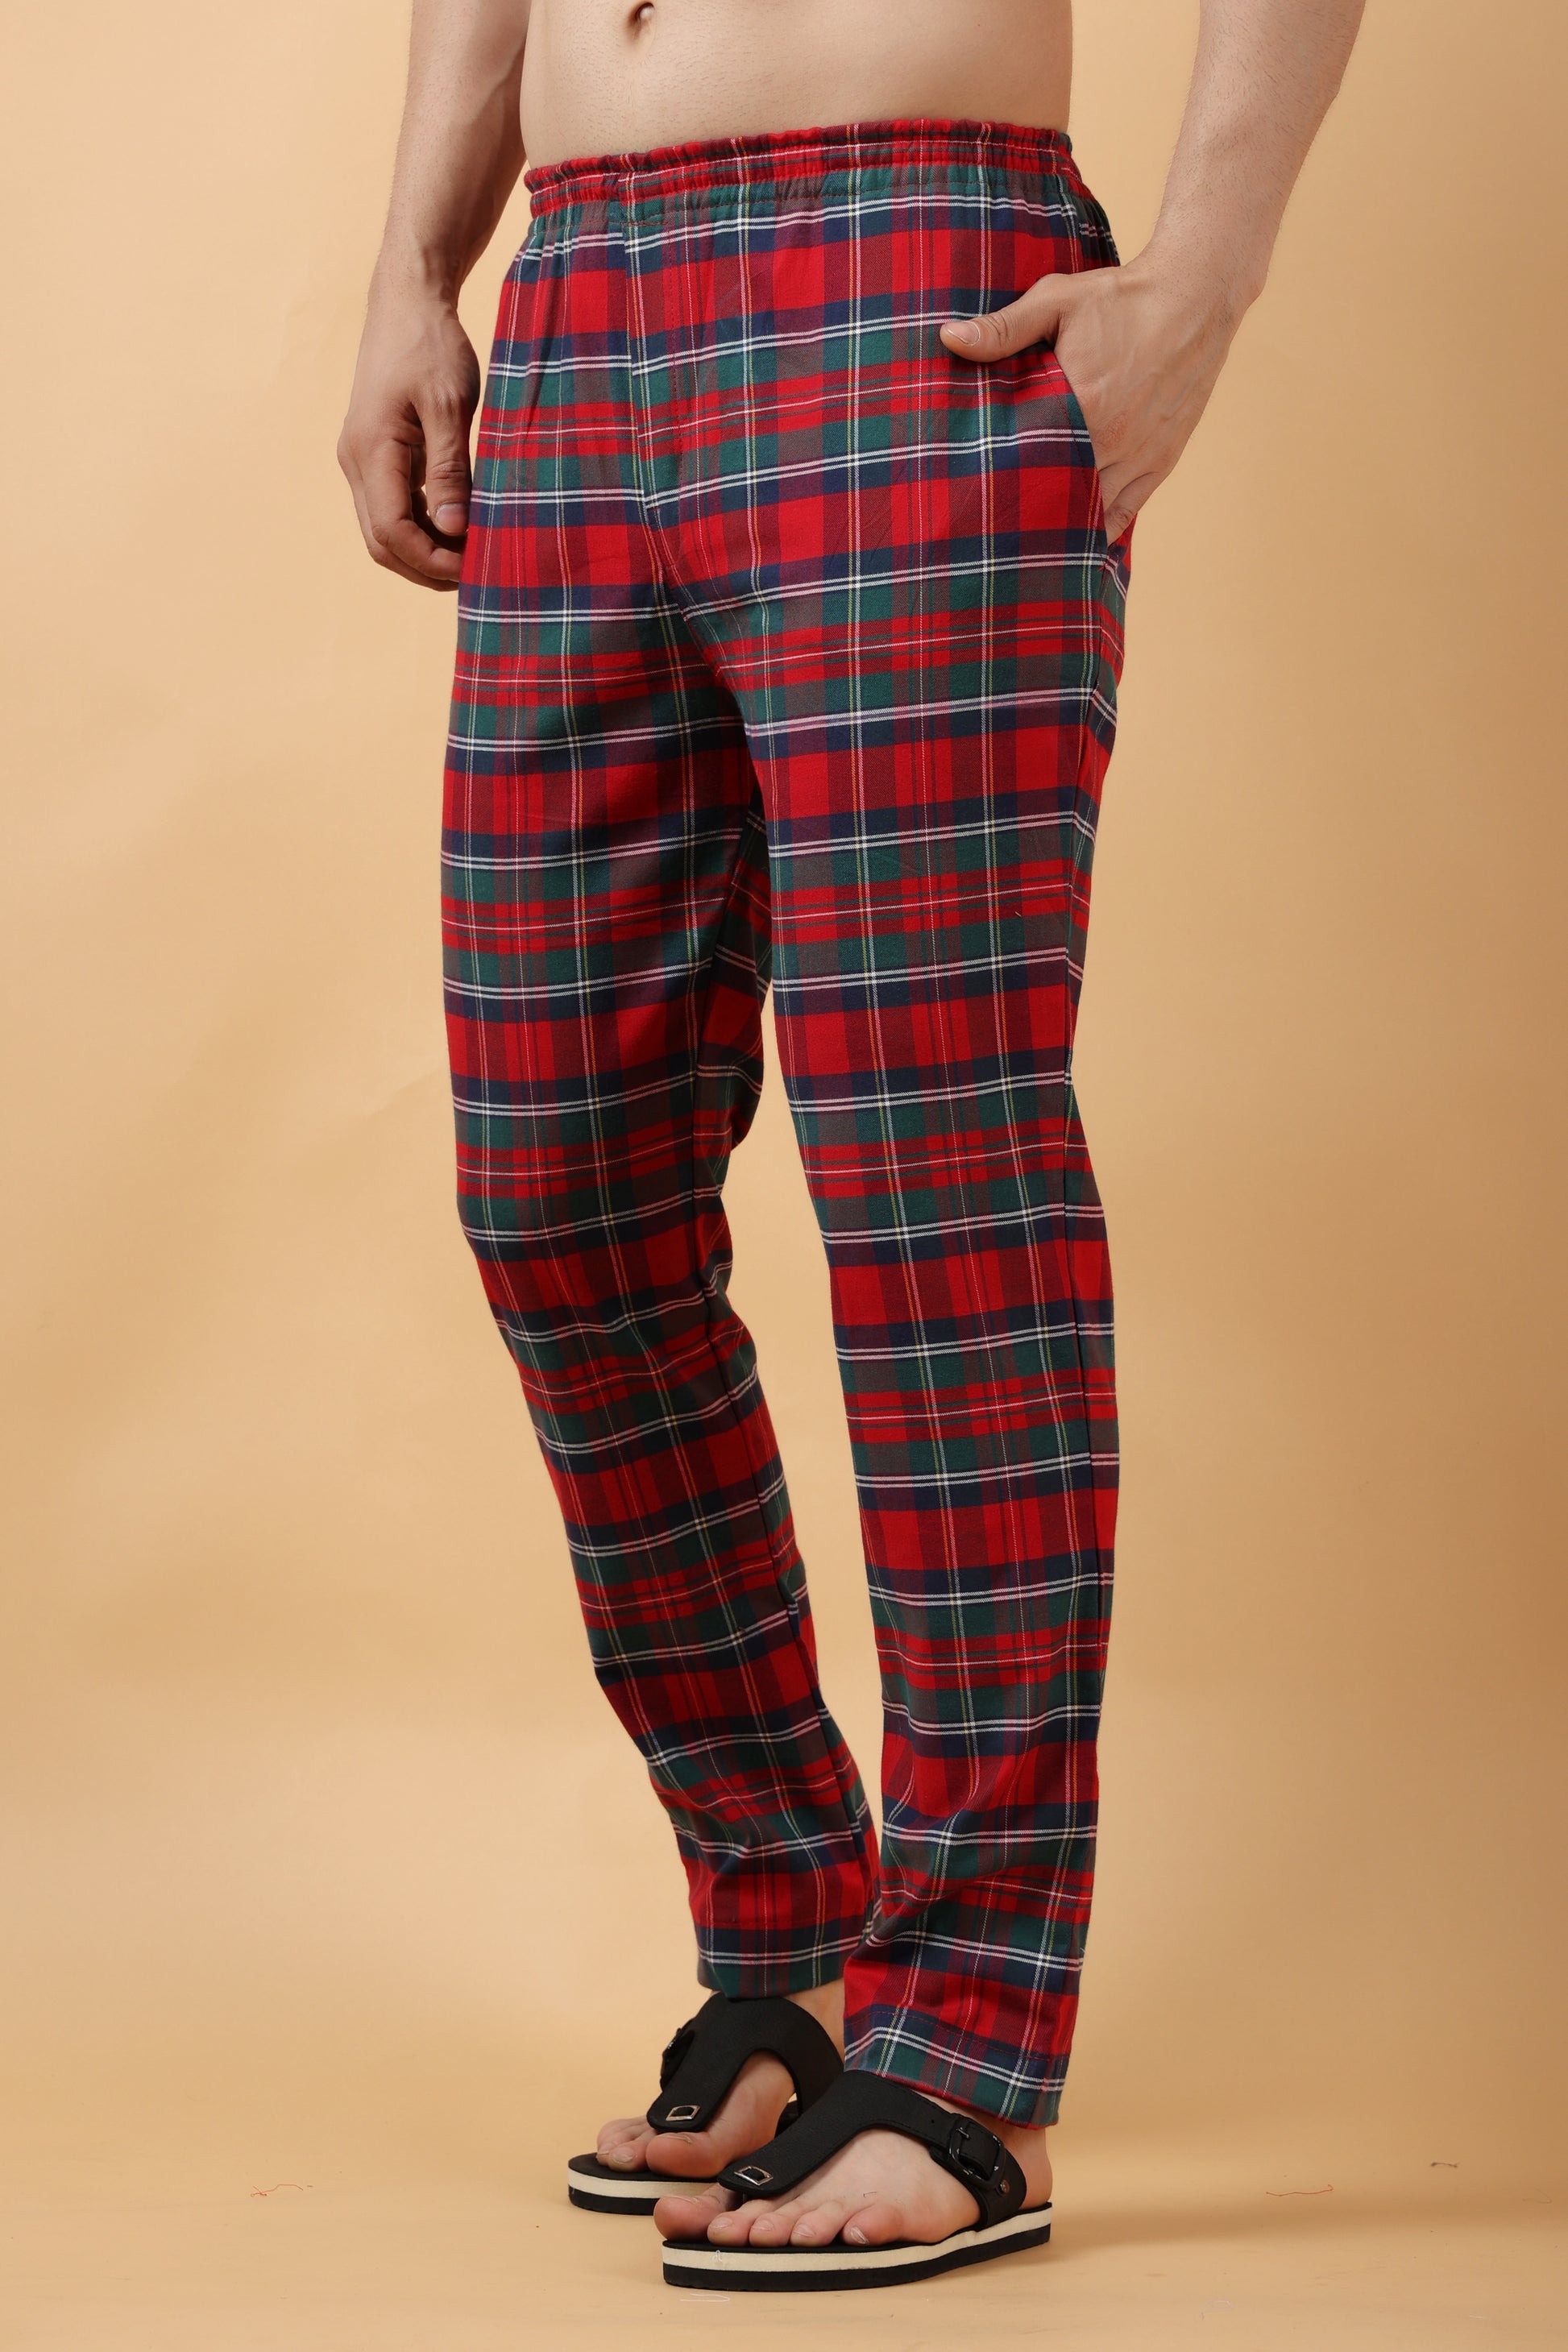 Pyjamas For Men